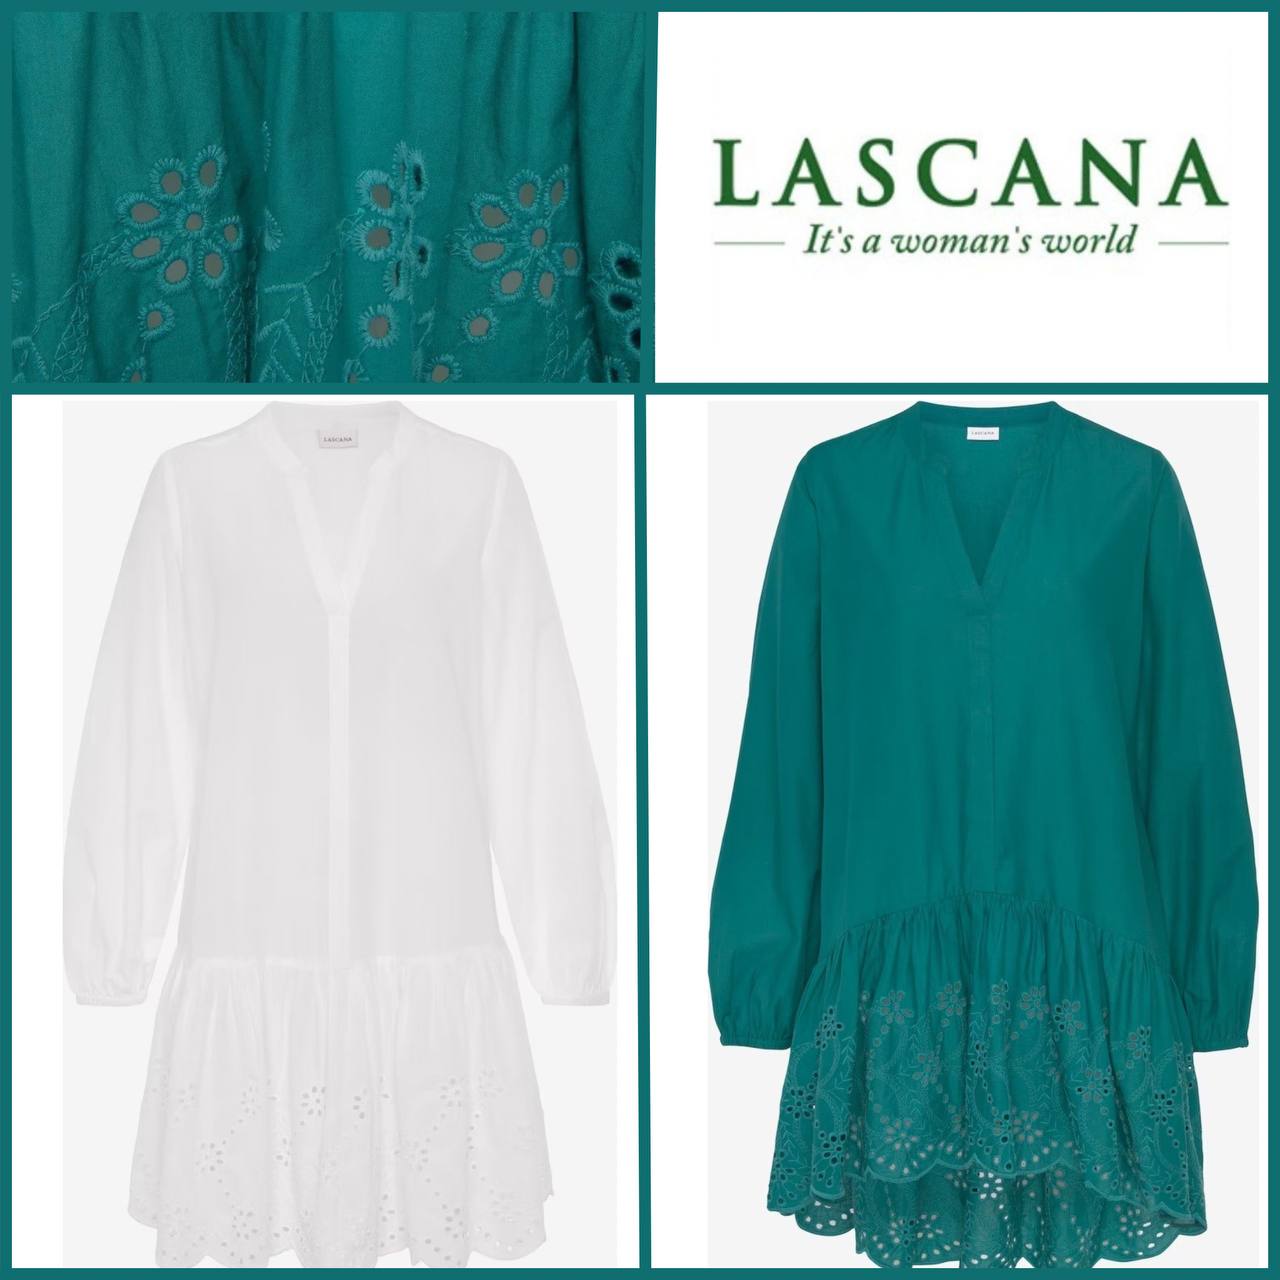 Women's dress by Lascana